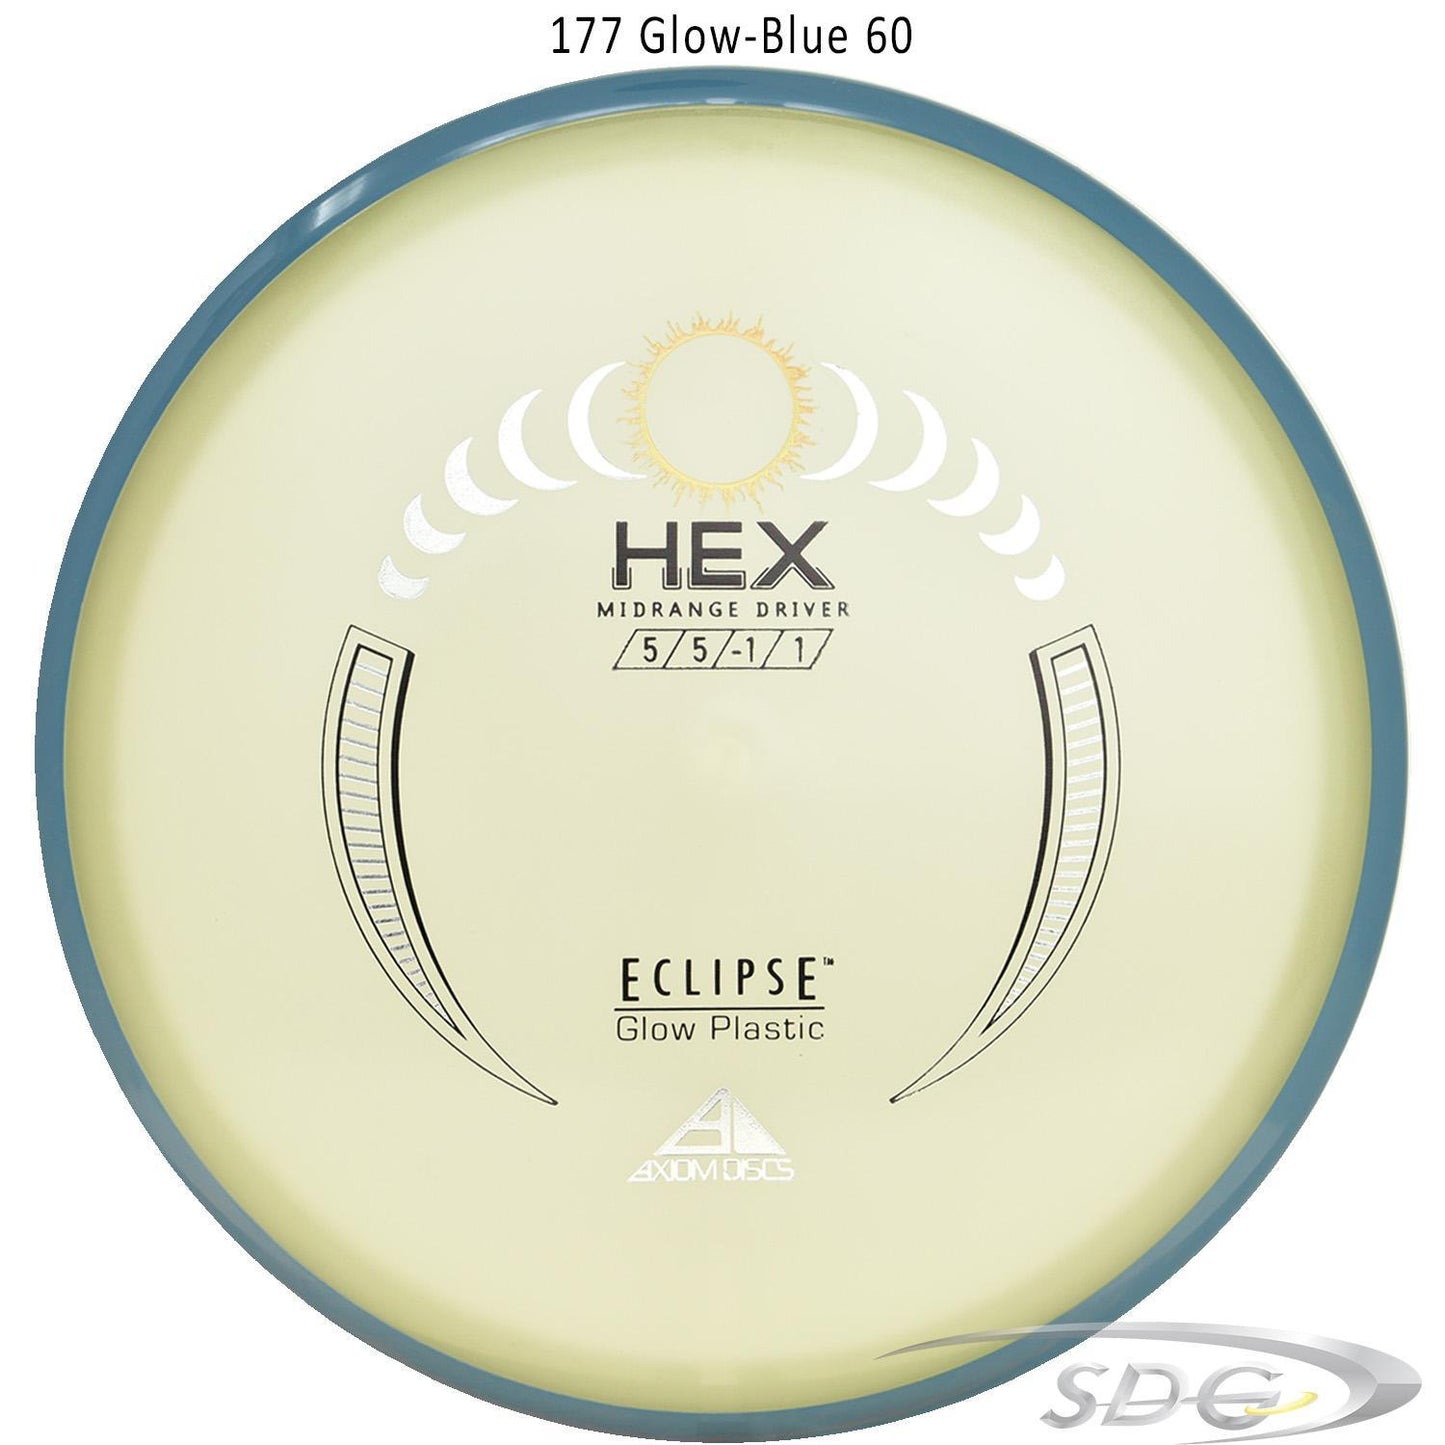 axiom-eclipse-hex-disc-golf-midrange 177 Glow-Blue 60